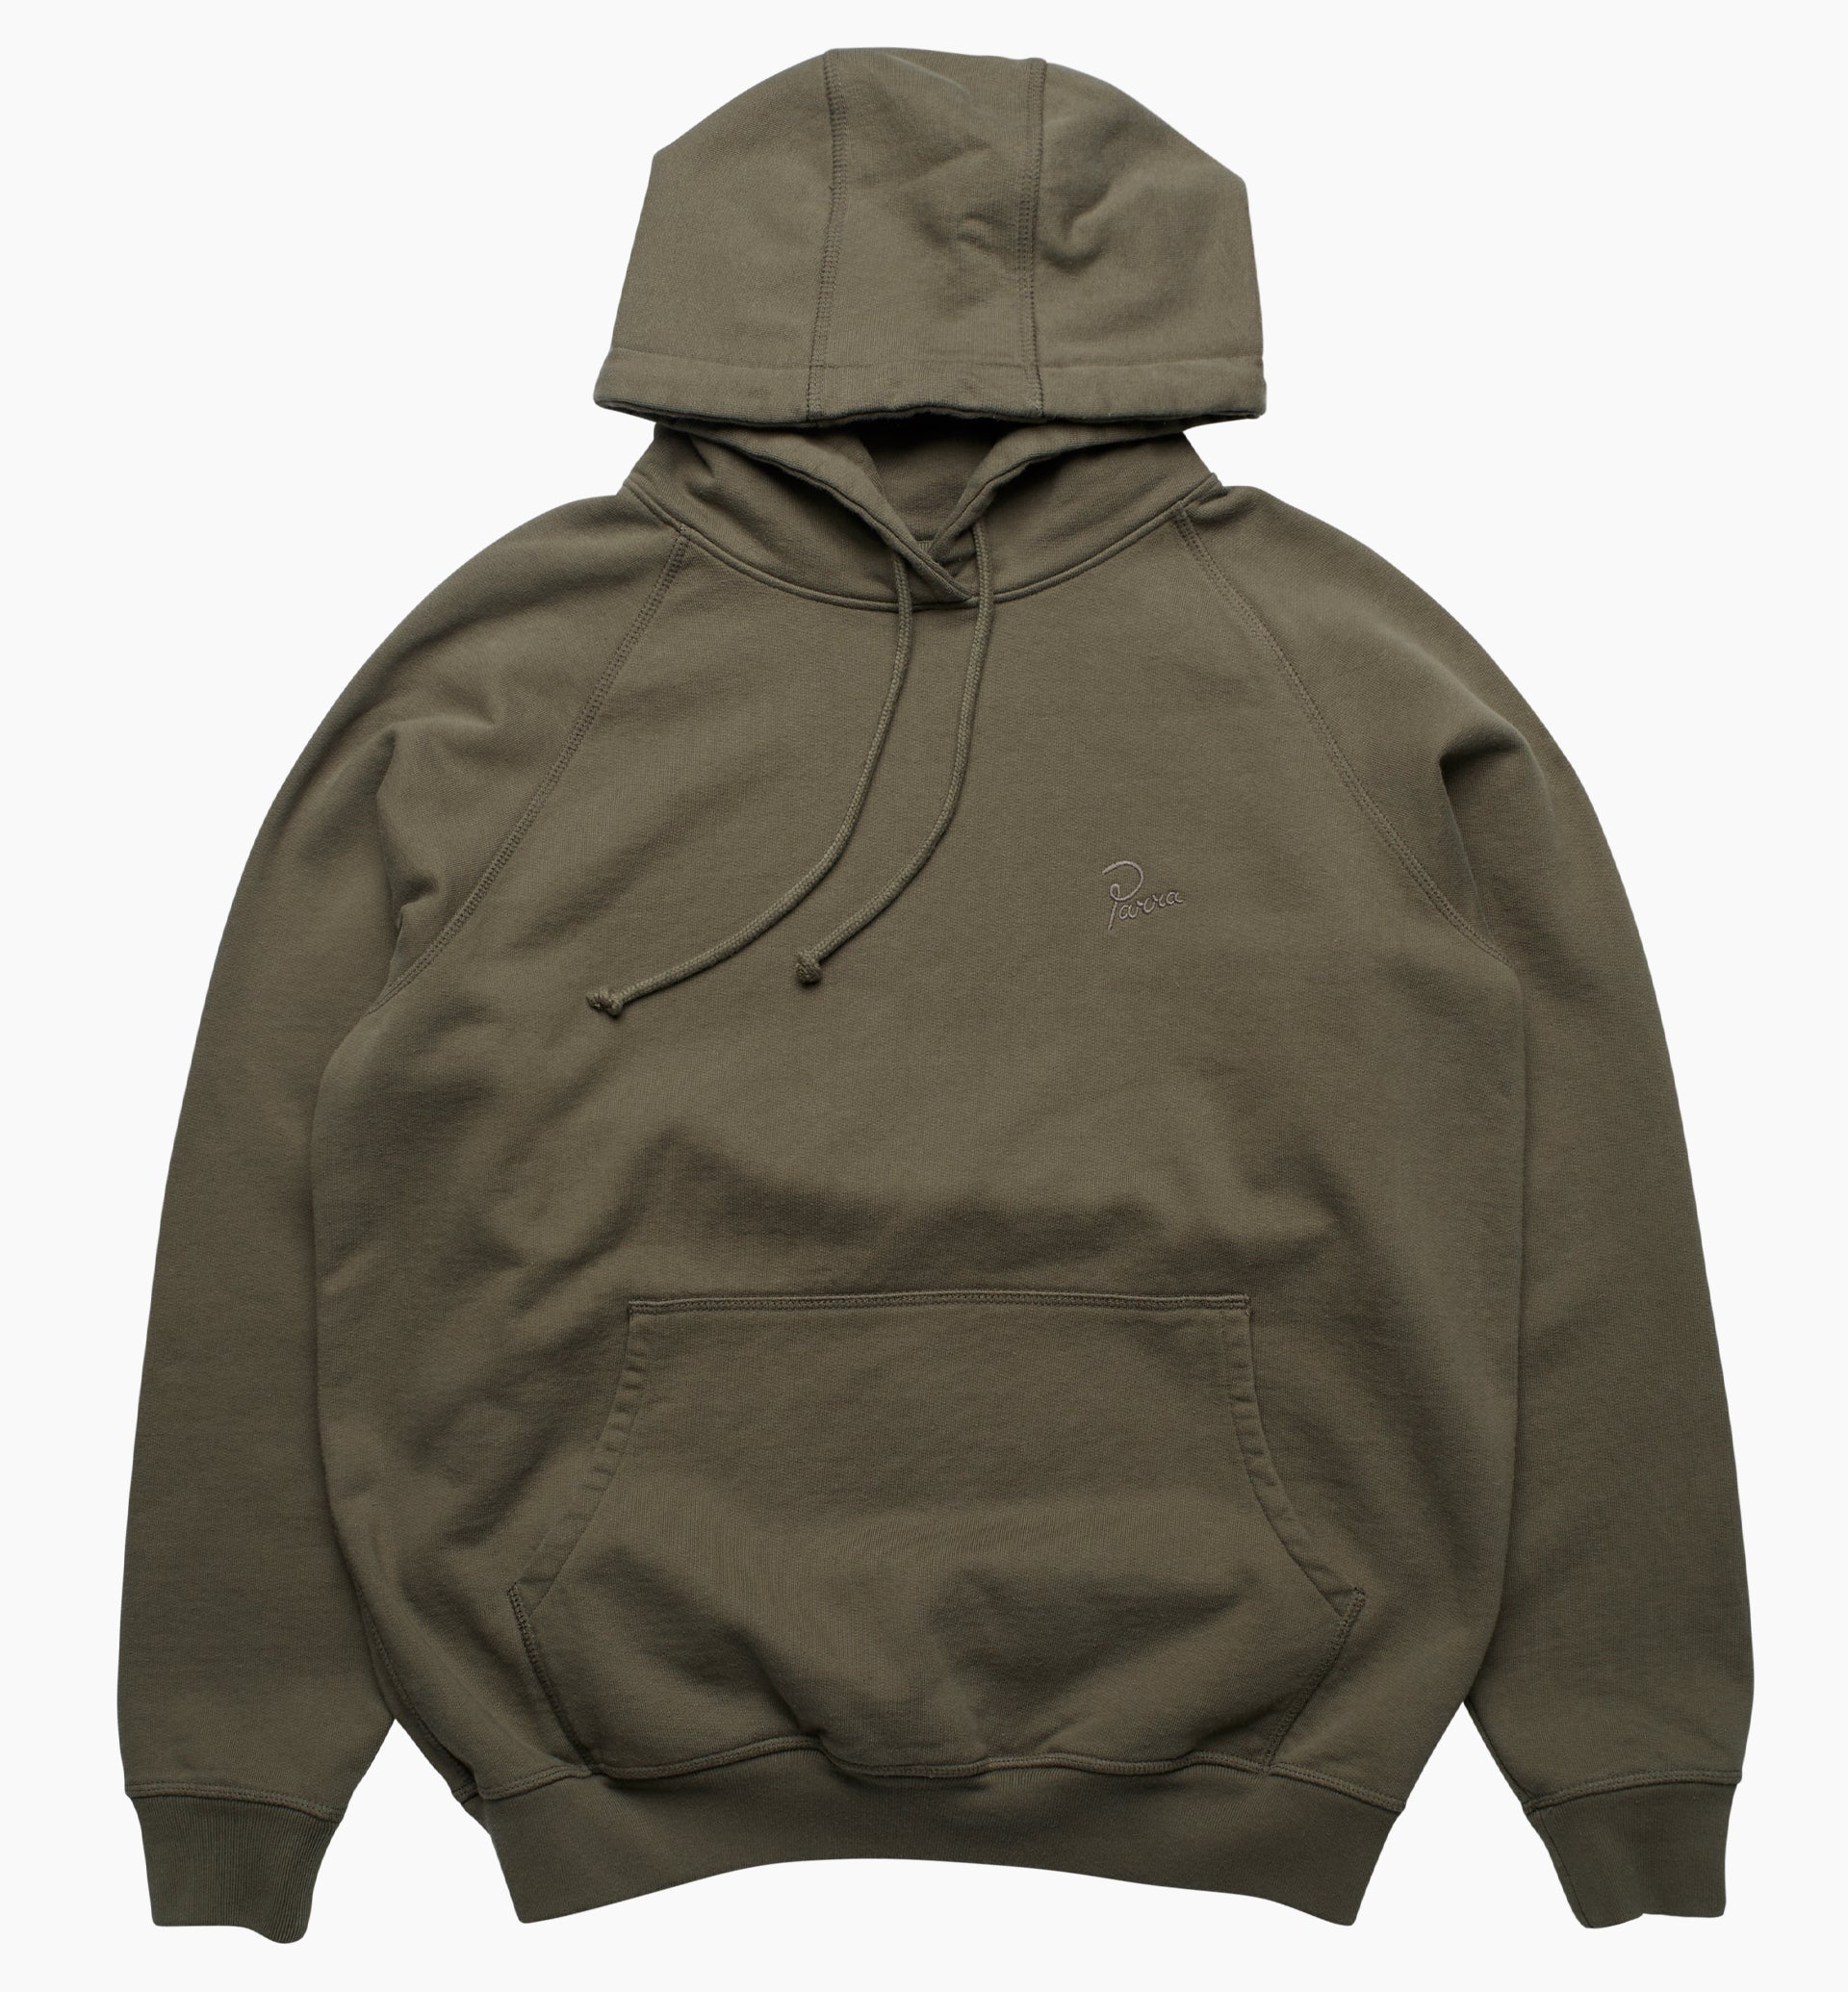 Parra - script logo hooded sweatshirt